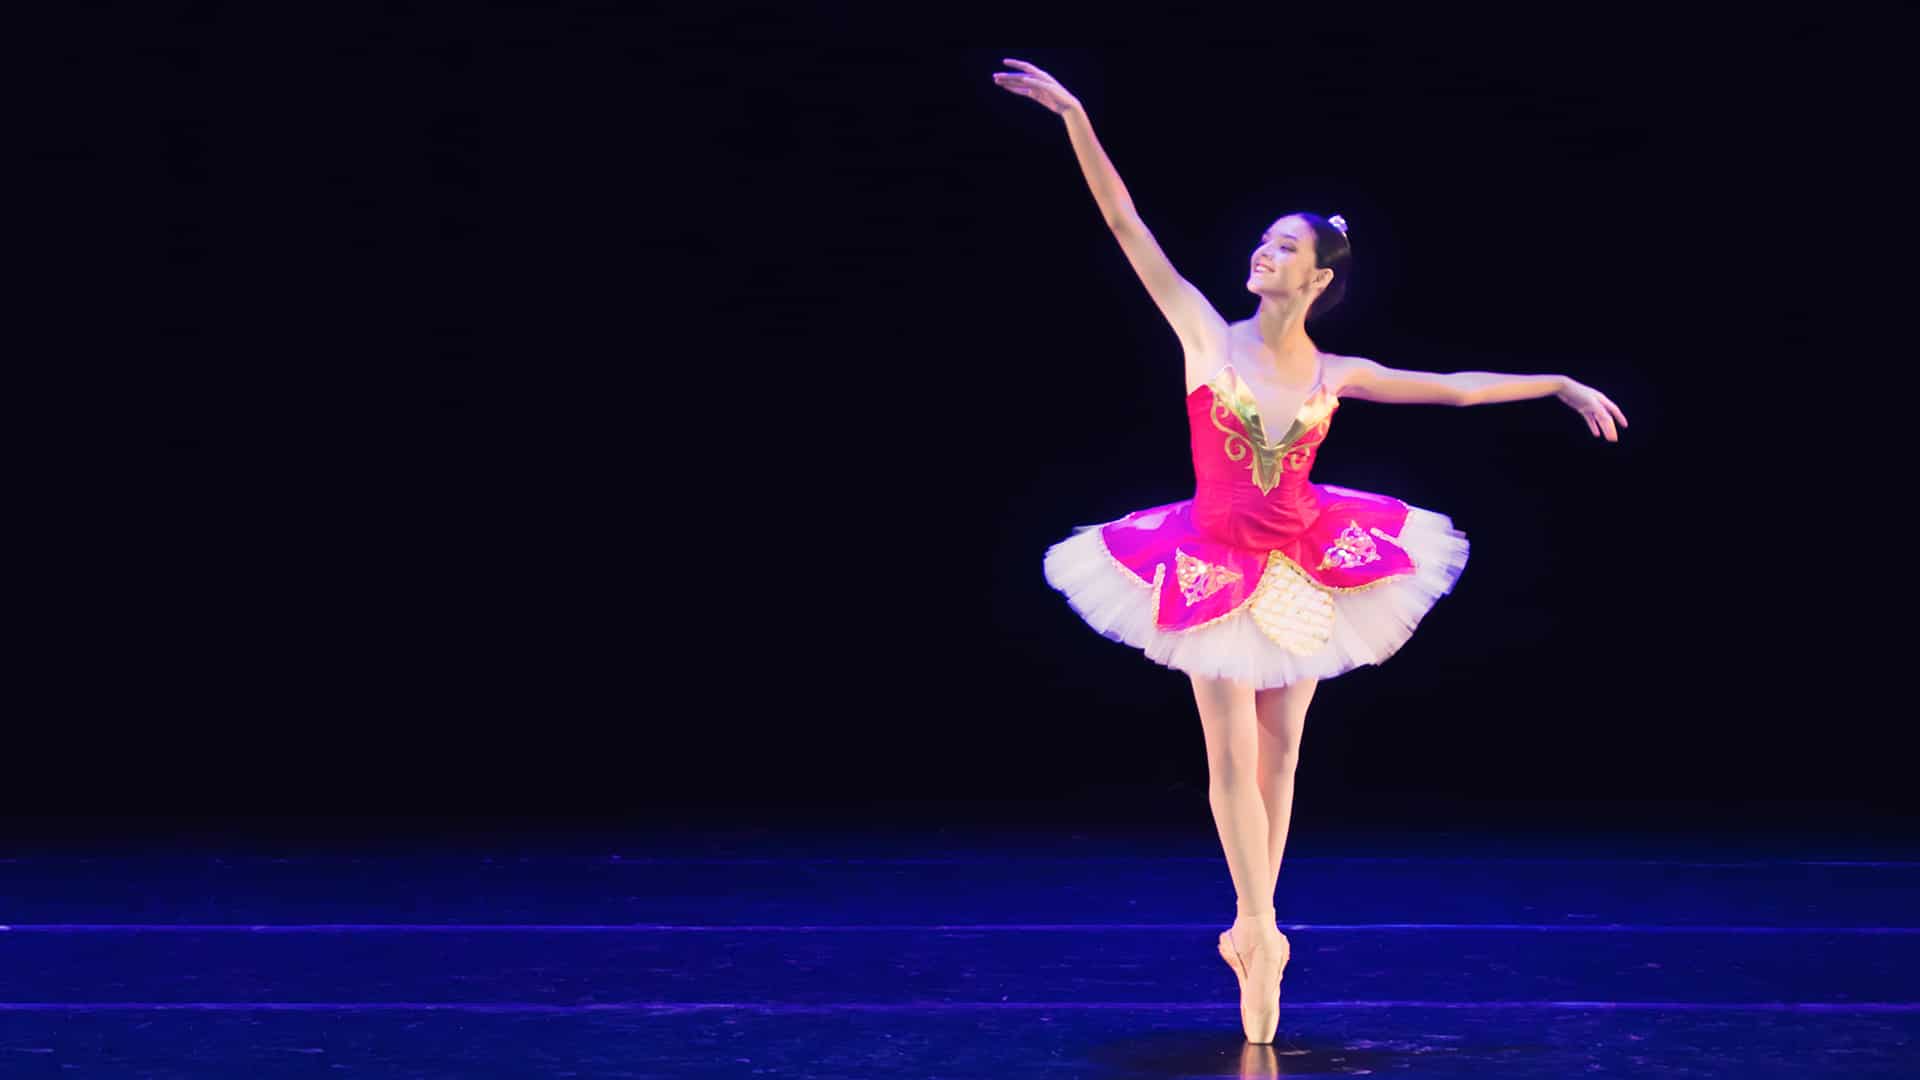 Ballerina dancing onstage on pointe in tutu